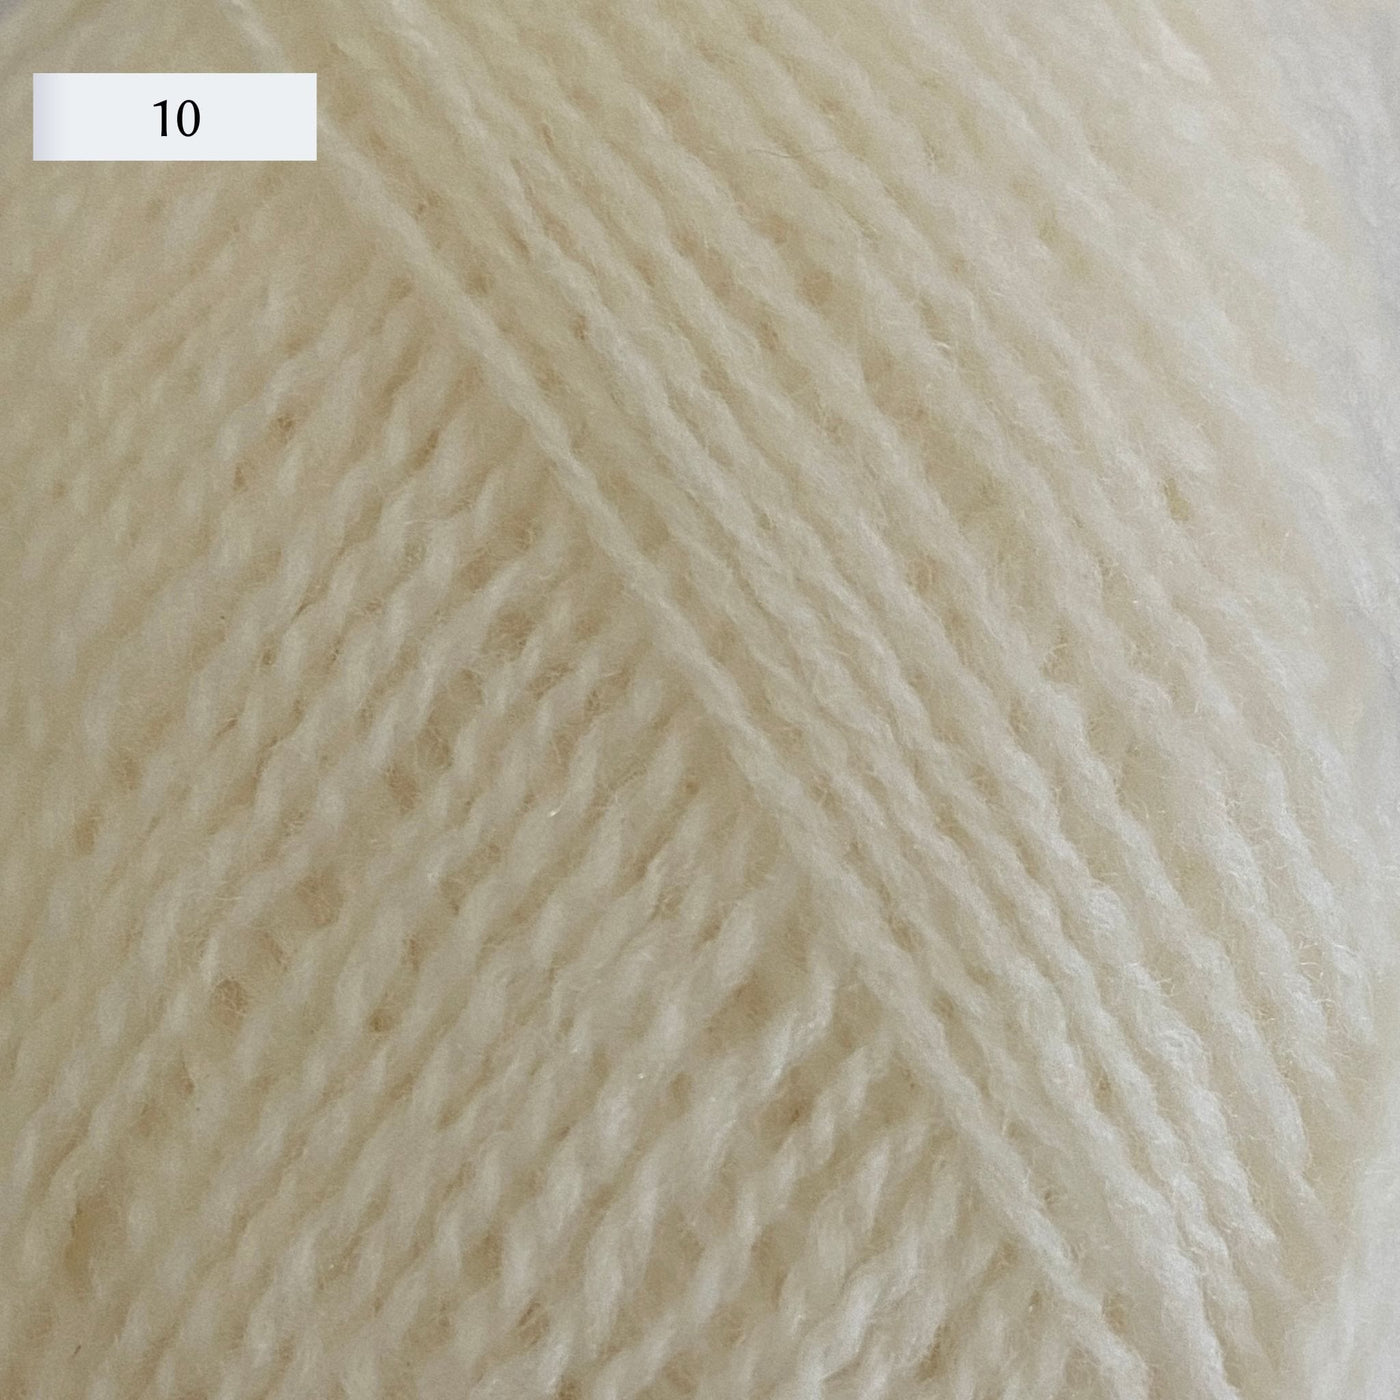 Rauma Lamullgarn, a fingering weight yarn, in color 10, a warm cream natural